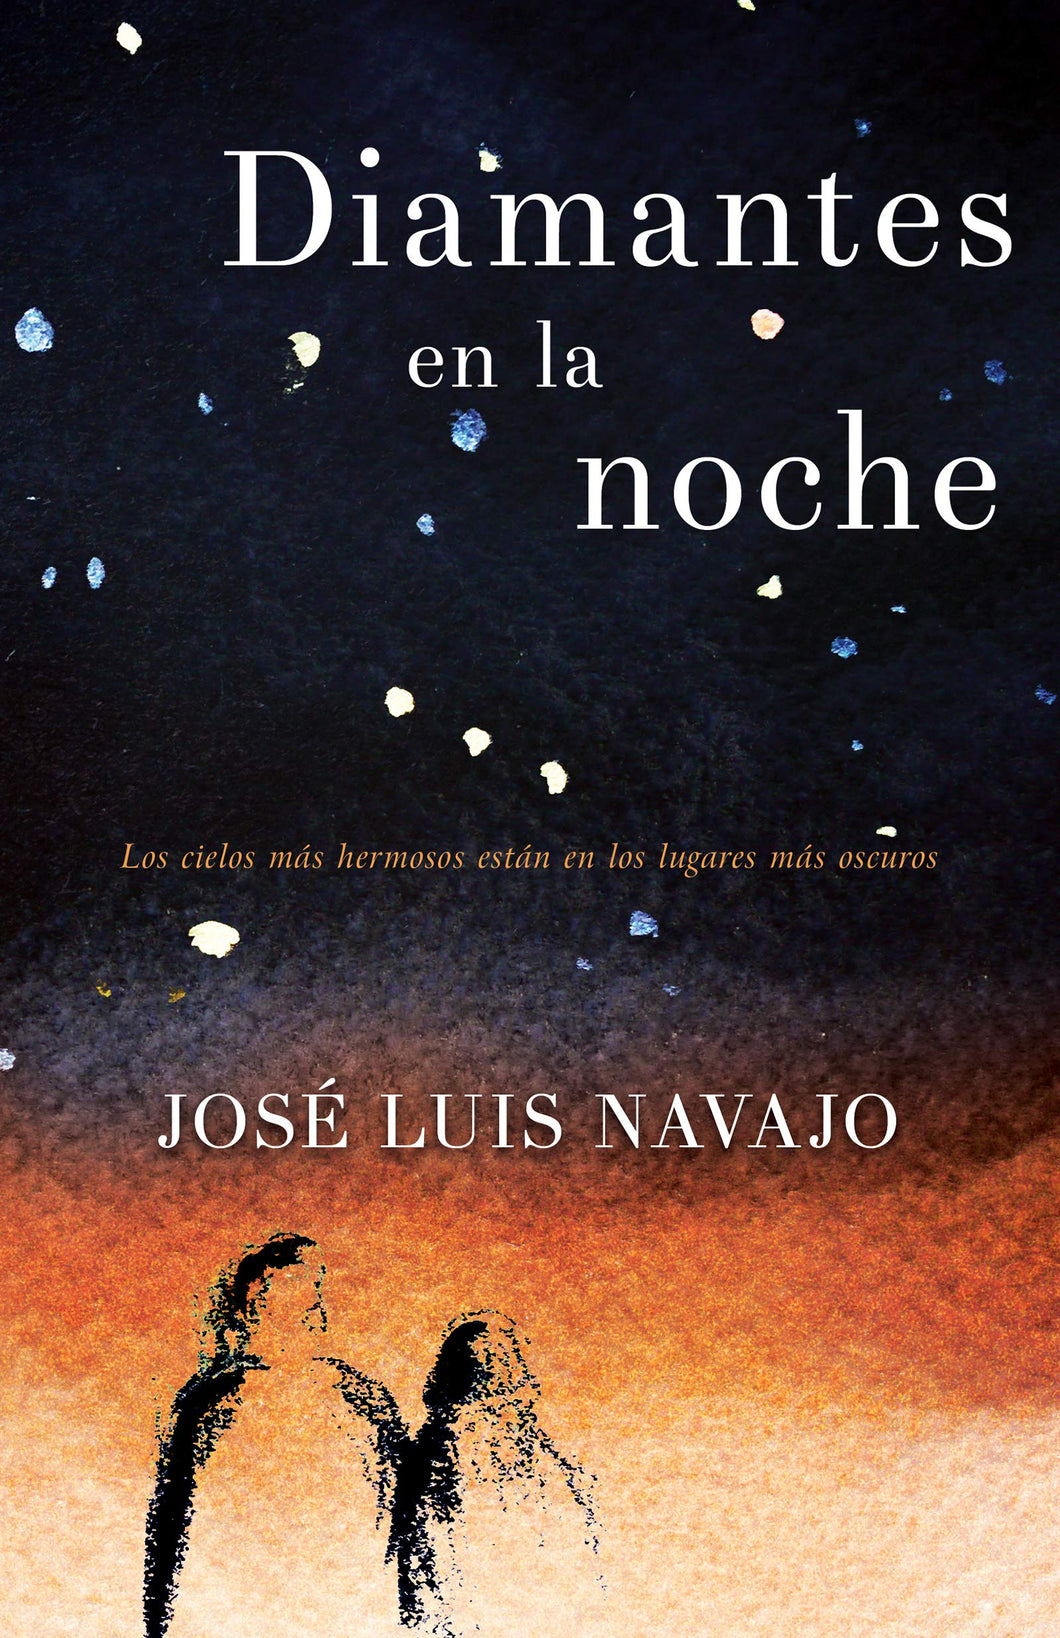 Diamantes en la noche - Jose Luis Navajo by Whitaker House